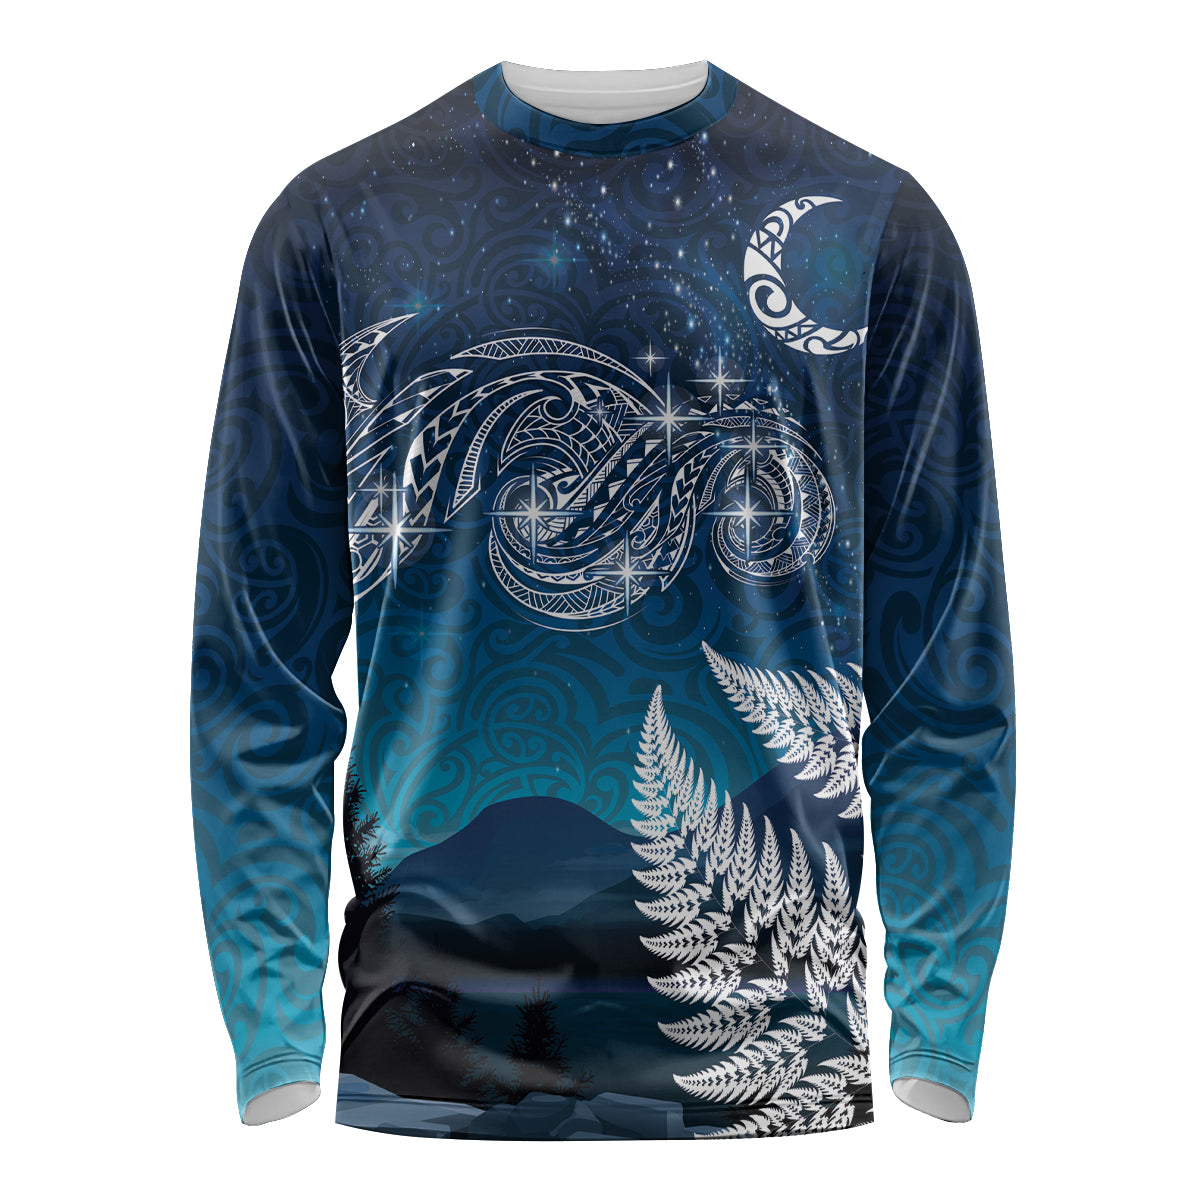 New Zealand Matariki Long Sleeve Shirt Starry Night Style